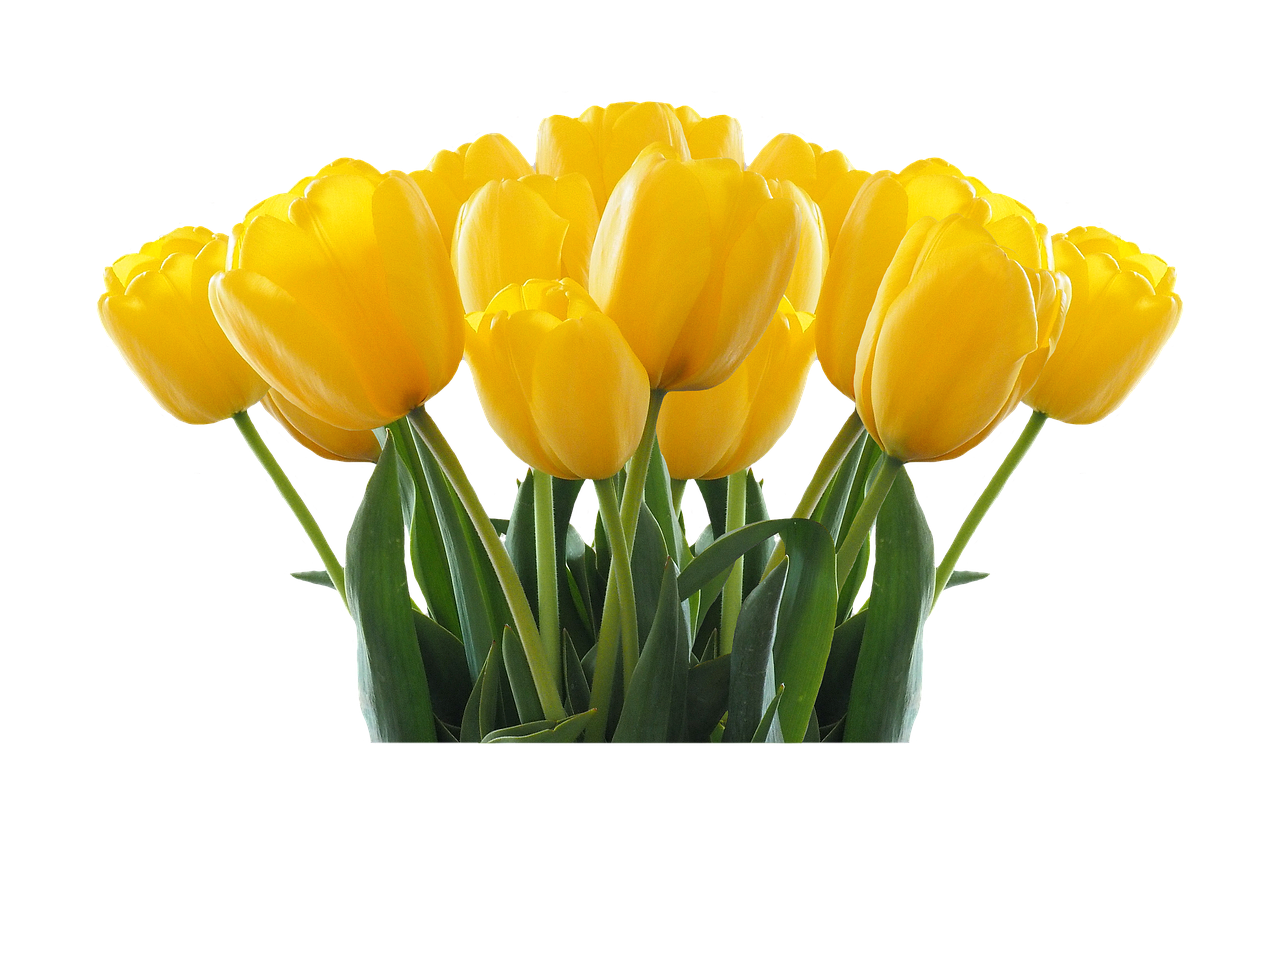 Vibrant Yellow Tulips Black Background